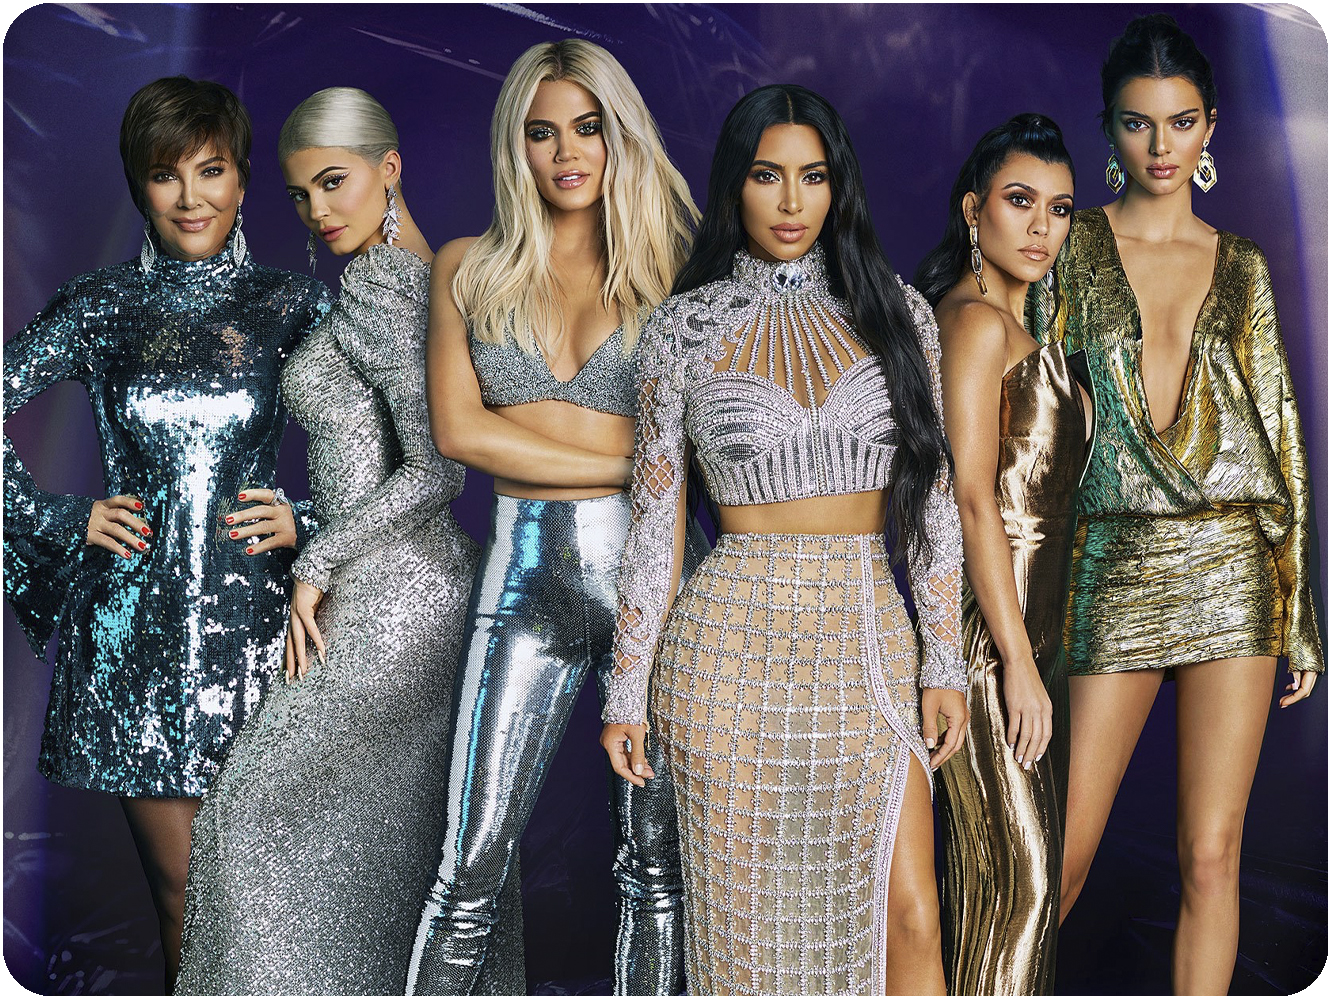 El clan Kardashian pone punto y final a ‘Keeping Up With The Kardashians’ en 2021